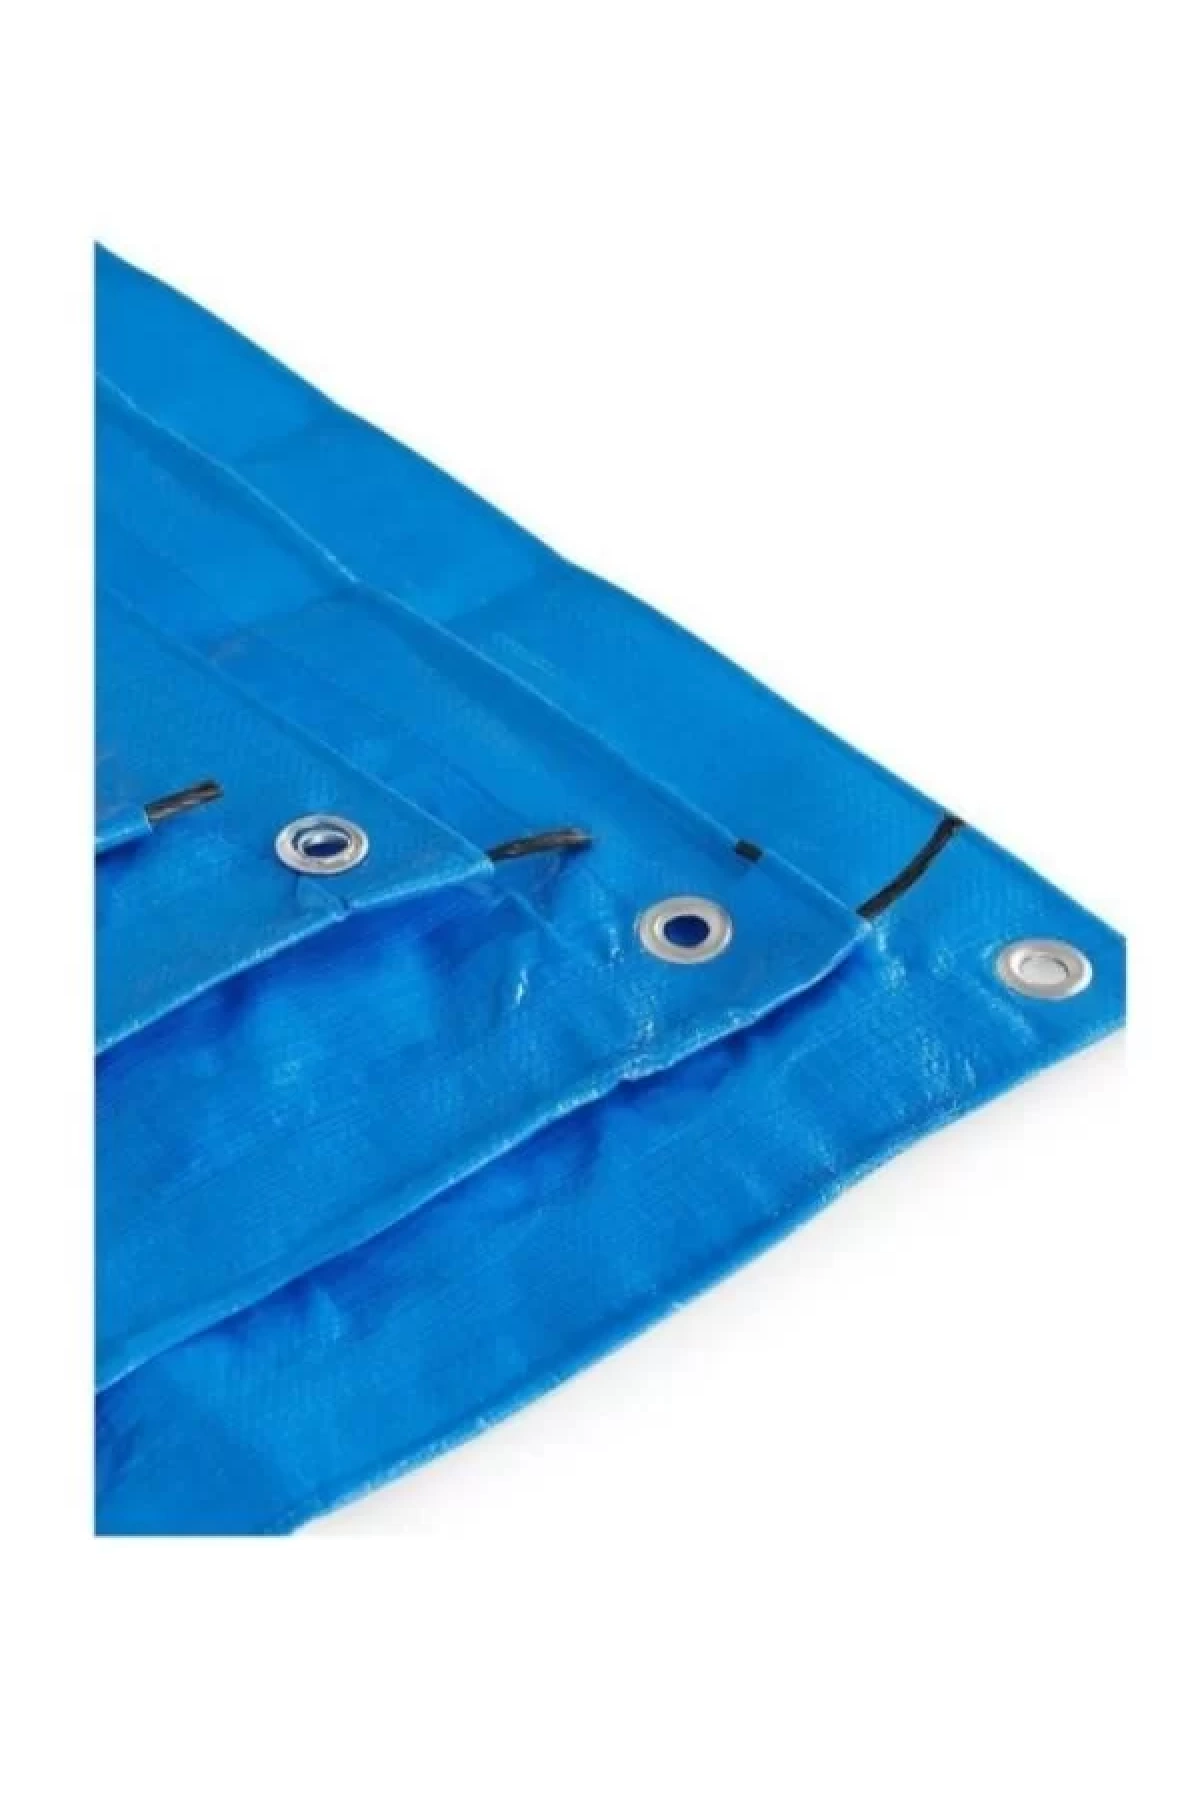 Su Geçirmez PVC-Parafin Gölgelik Çadır-Tente-Branda Mavi 8 x 15 m